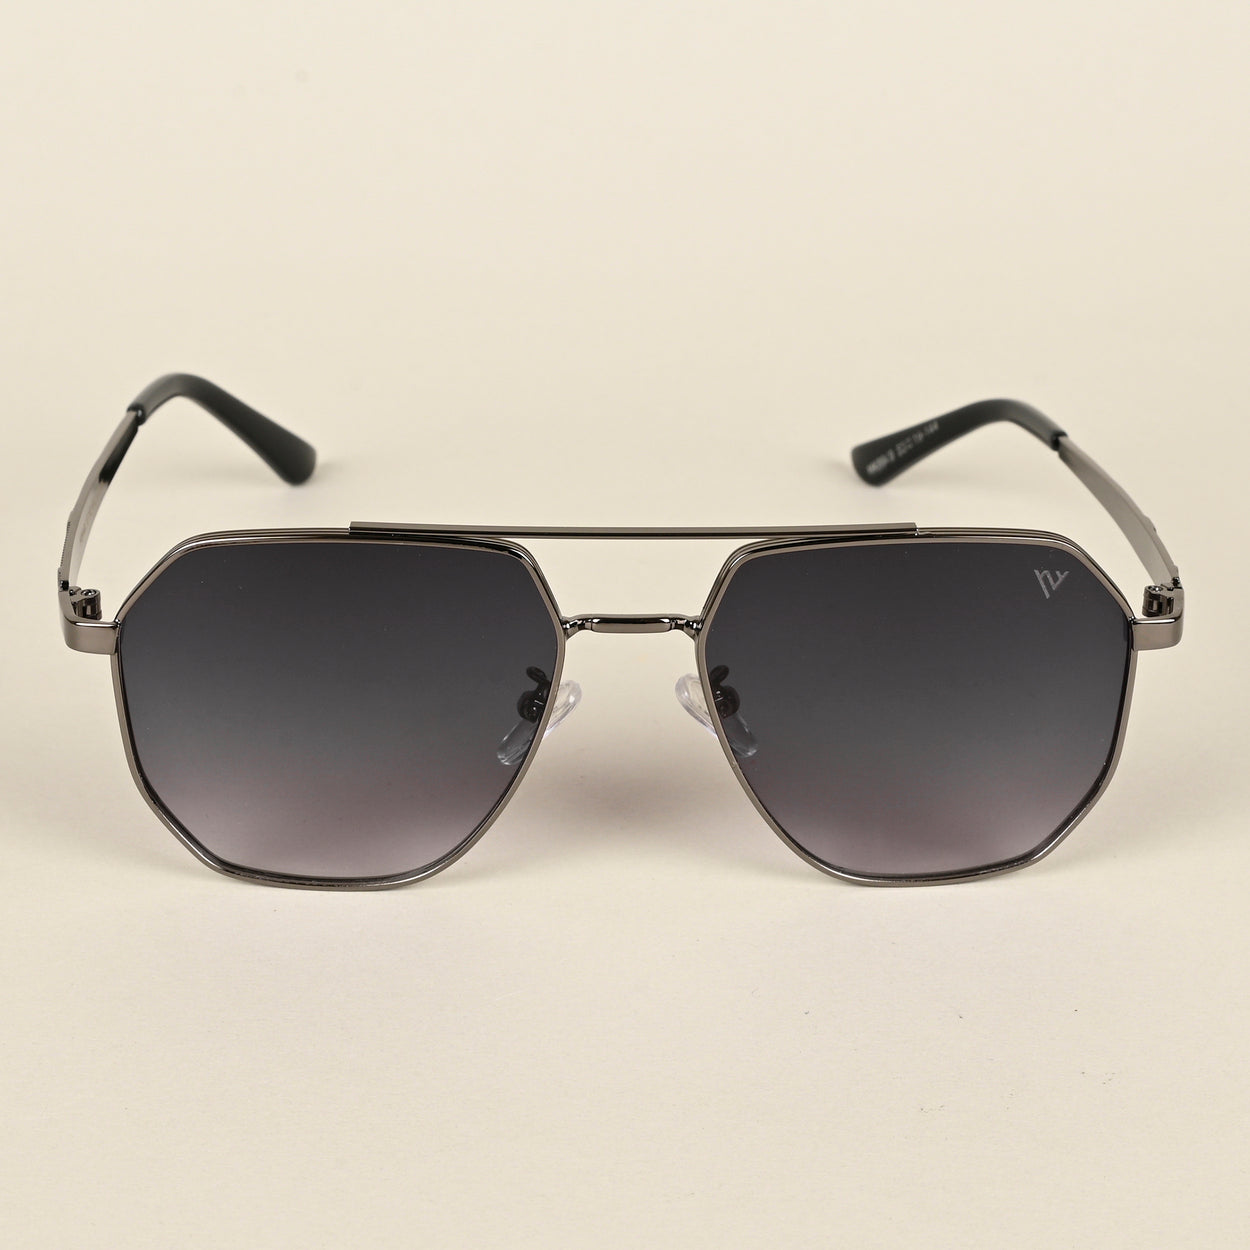 Voyage Grey weyfarer Sunglasses for Men & Women (8949MG4325)